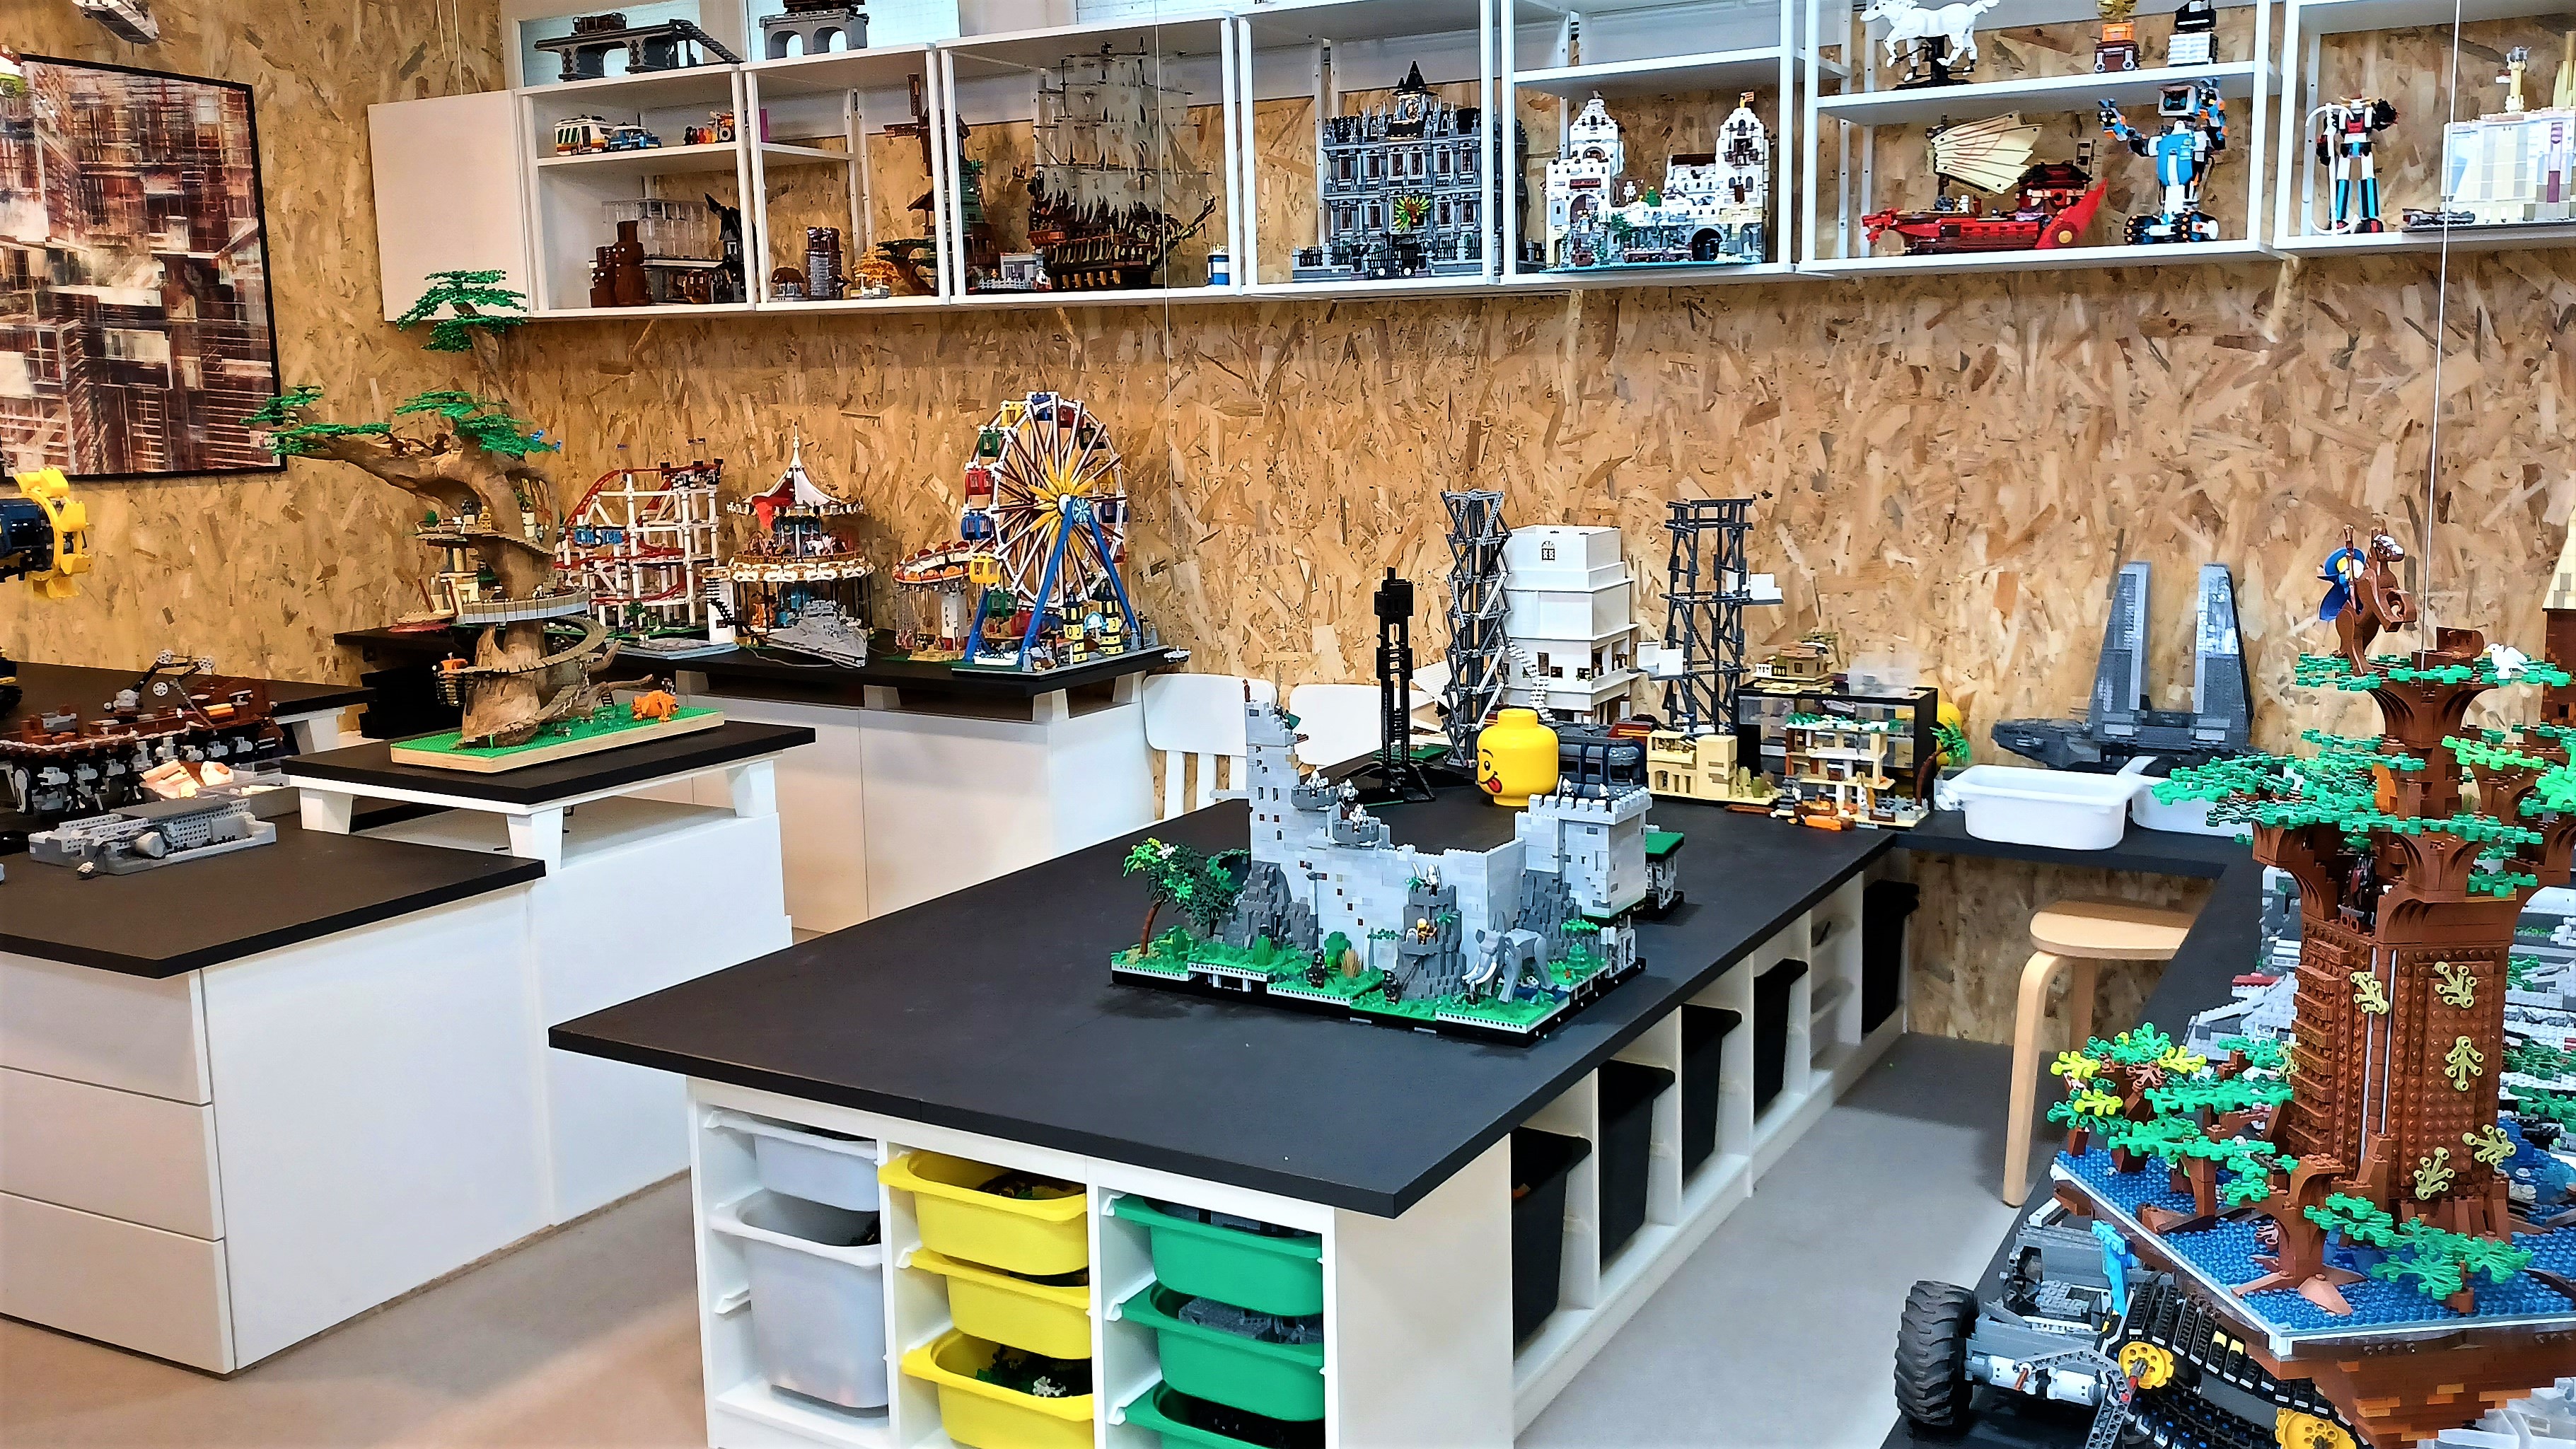 Lego city La Maison